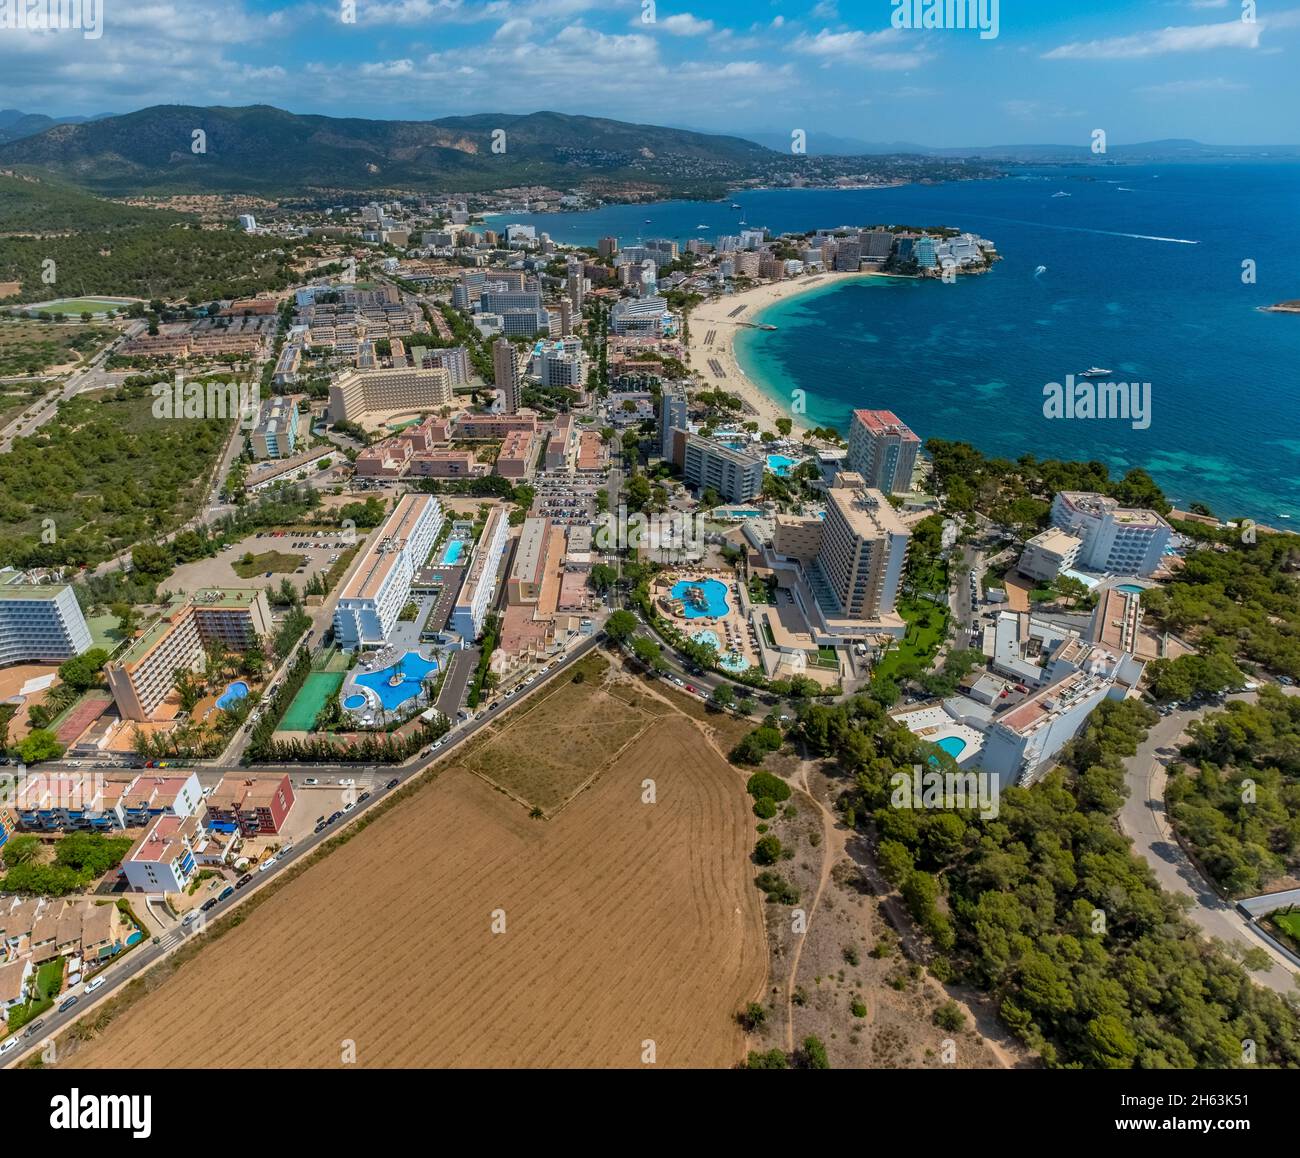 aerial view,sandy beach platja de magaluf with hotel complexes,isla de sa porrassa island in the bay of magaluf,magaluf,calvià,mallorca,balearic islands,spain Stock Photo